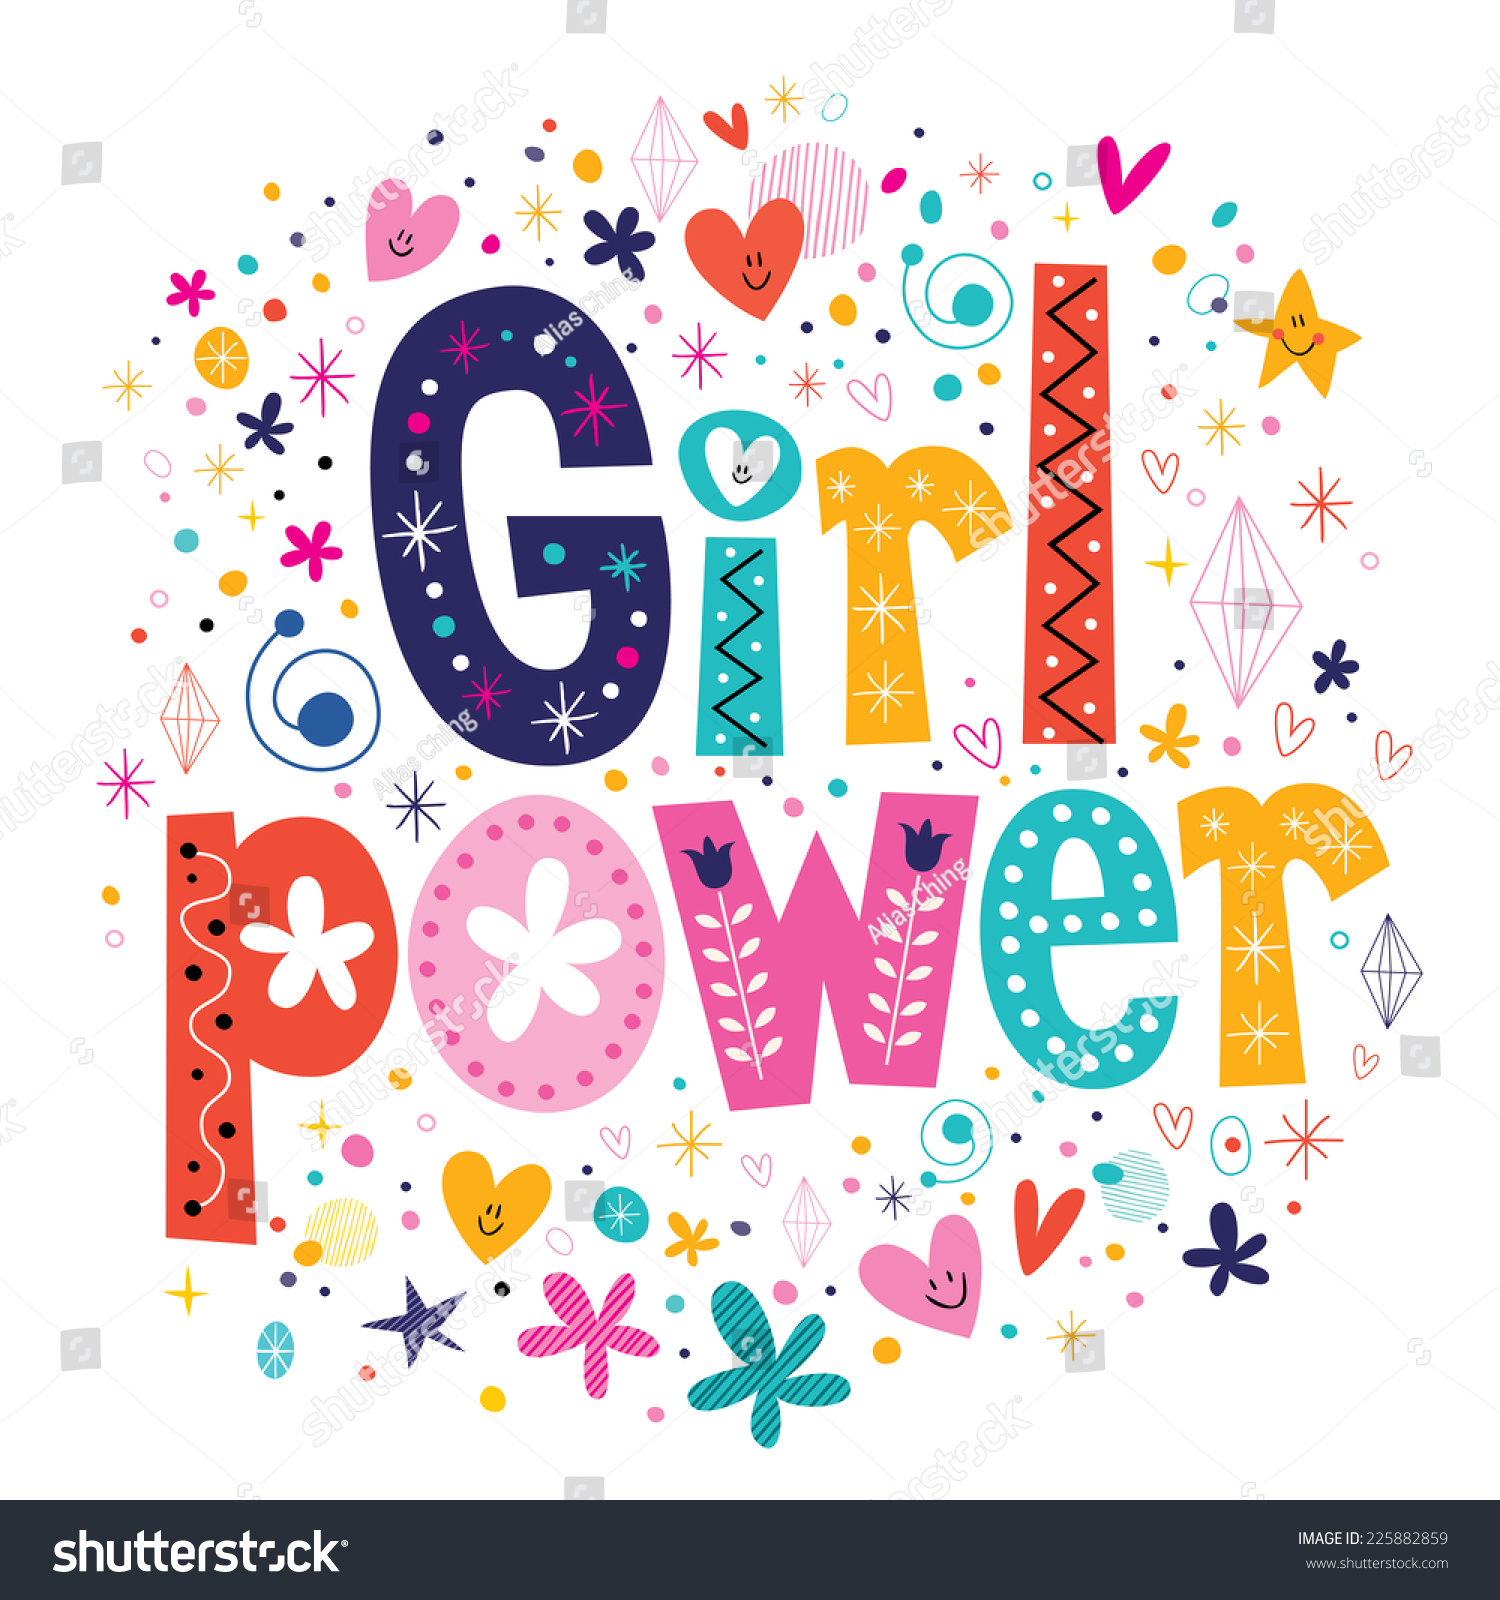 stock vector girl power 225882859